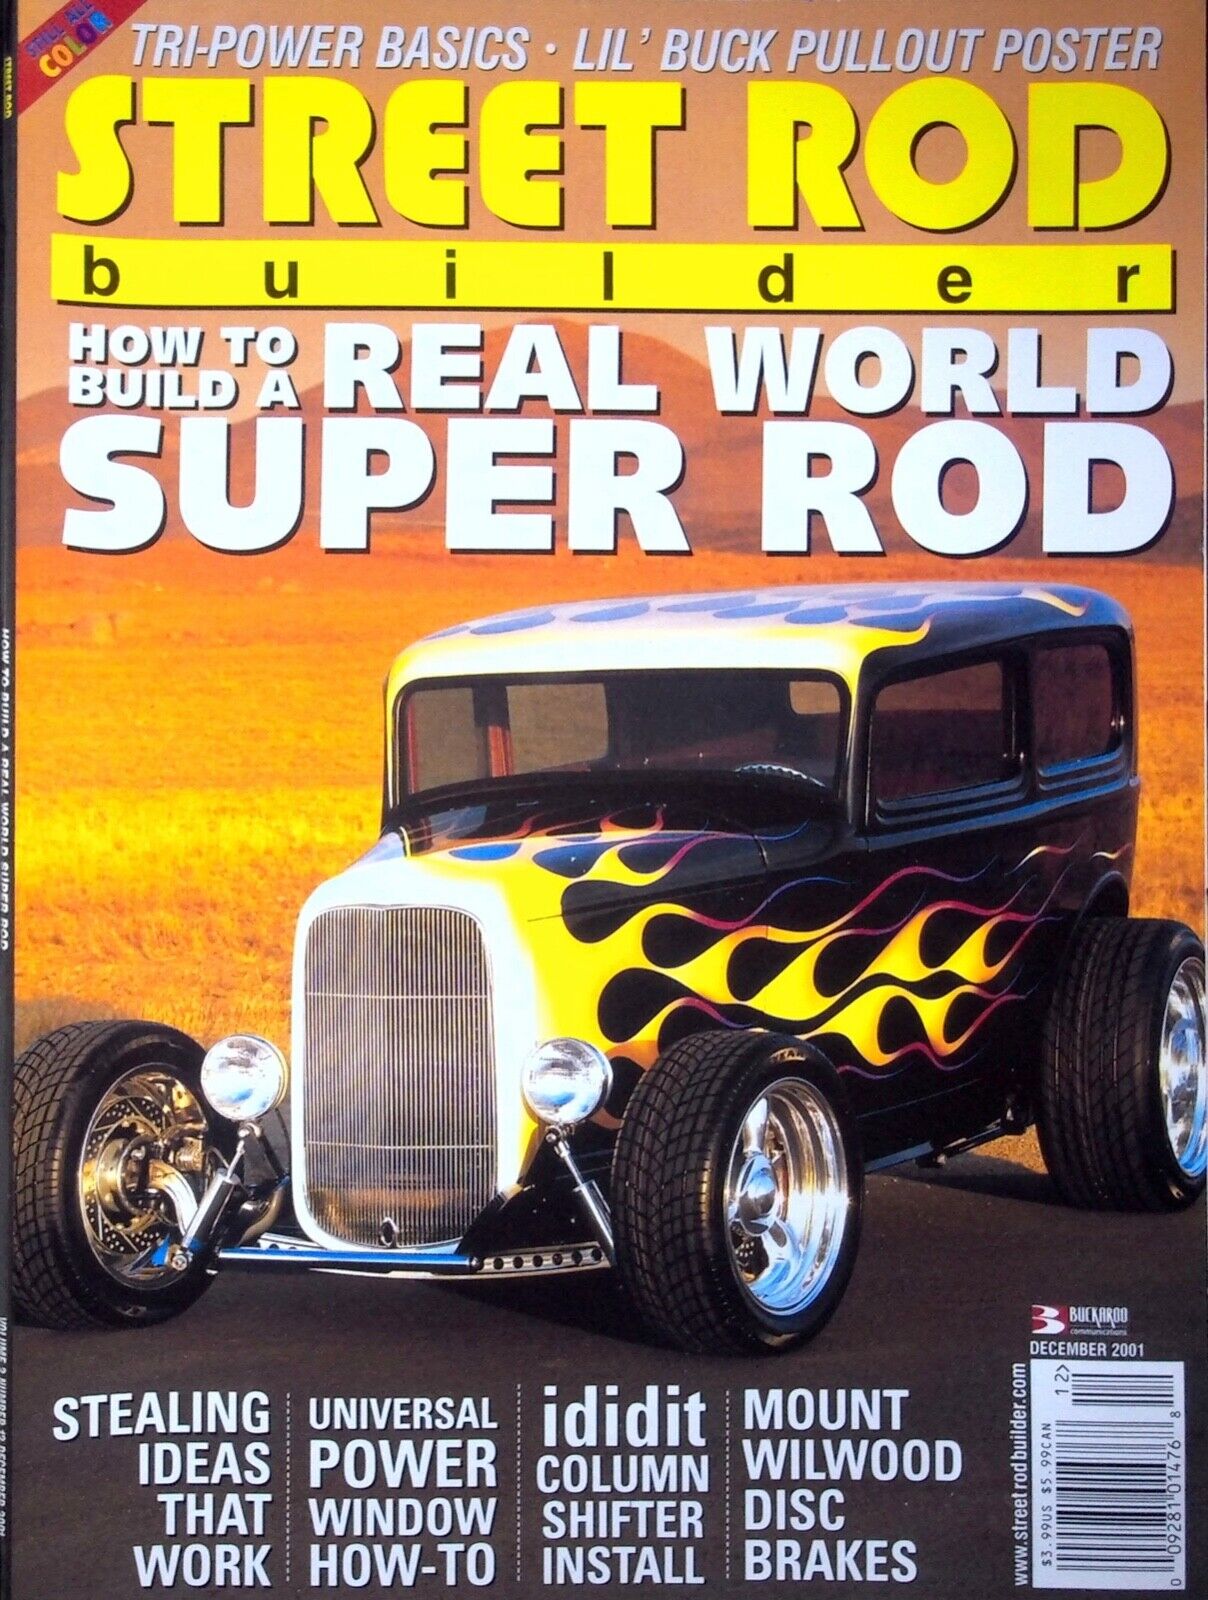 BUILD A REAL WORLD SUPER ROD - STREER ROD BUILDER MAGAZINE, DECEMBER 2001